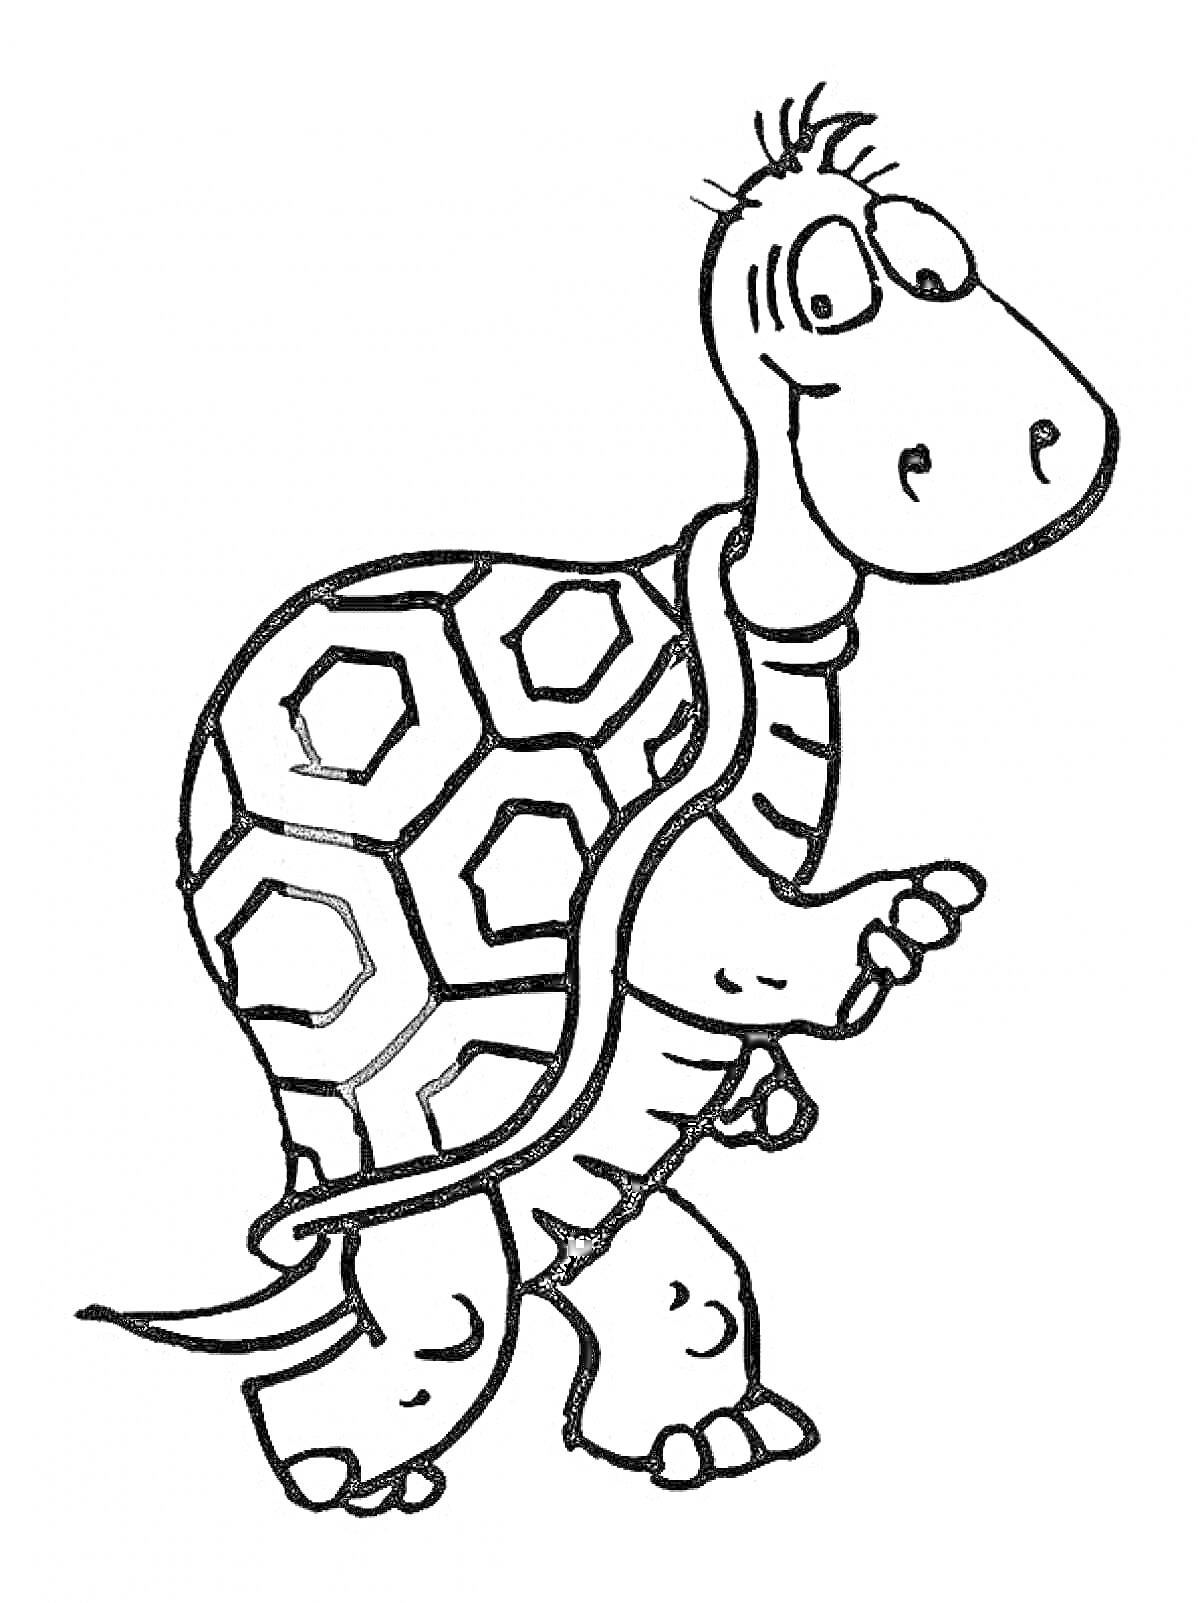 Раскраска Черепаха с геометрическим узором на панцире и пушистым чубчиком